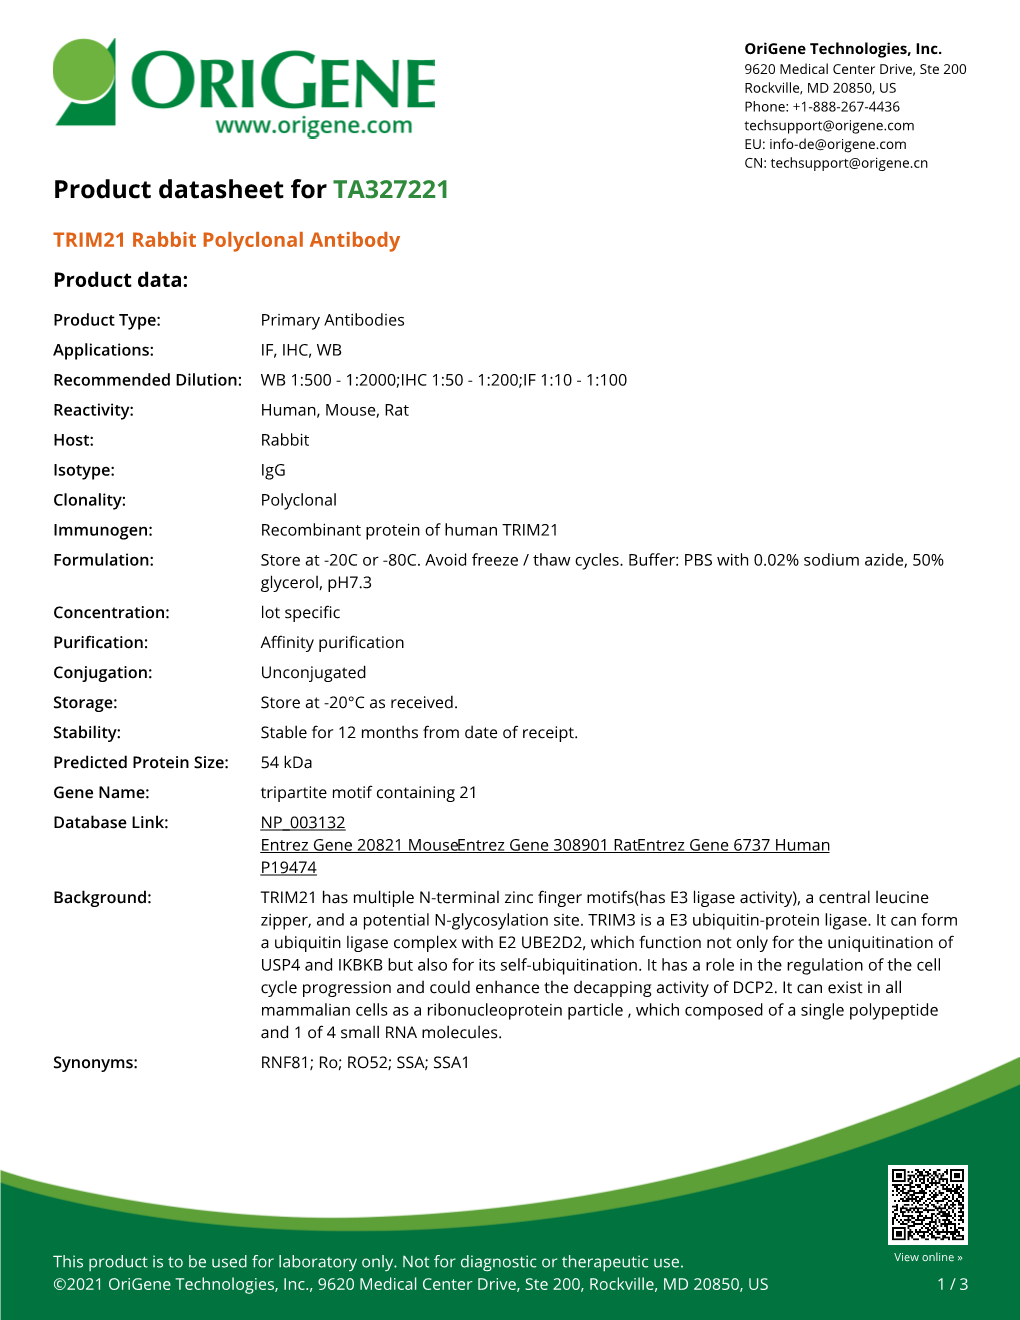 TRIM21 Rabbit Polyclonal Antibody – TA327221 | Origene